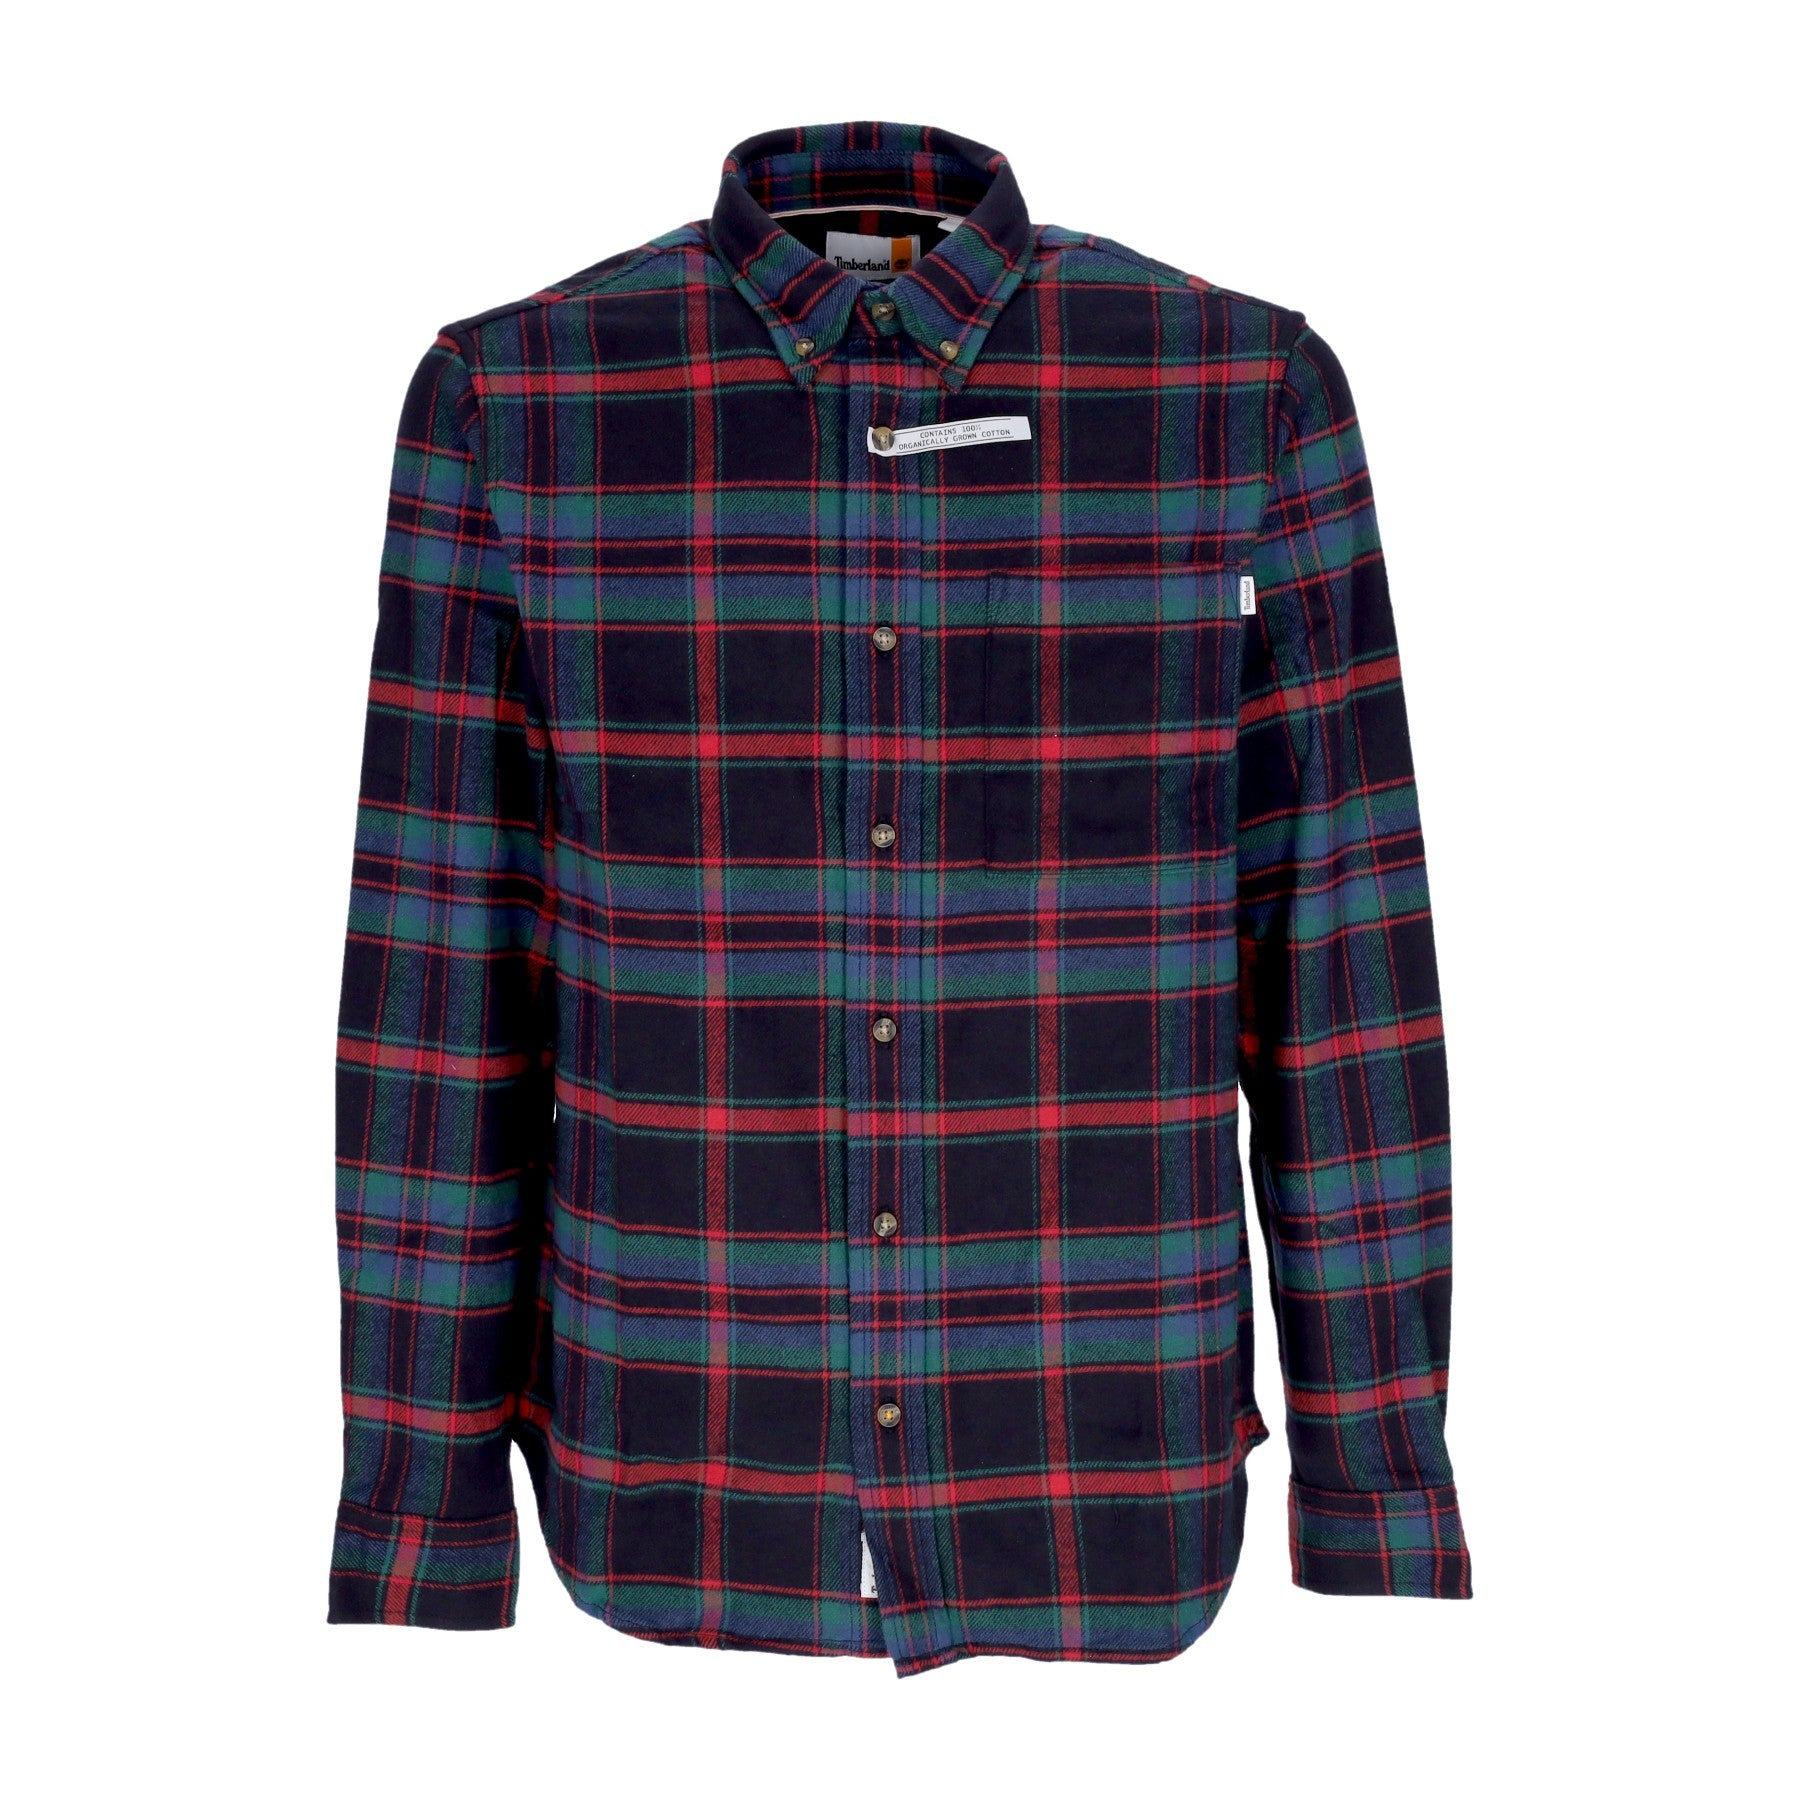 Timberland, Camicia Manica Lunga Uomo Flannel Plaid Shirt, Scarlet Sage